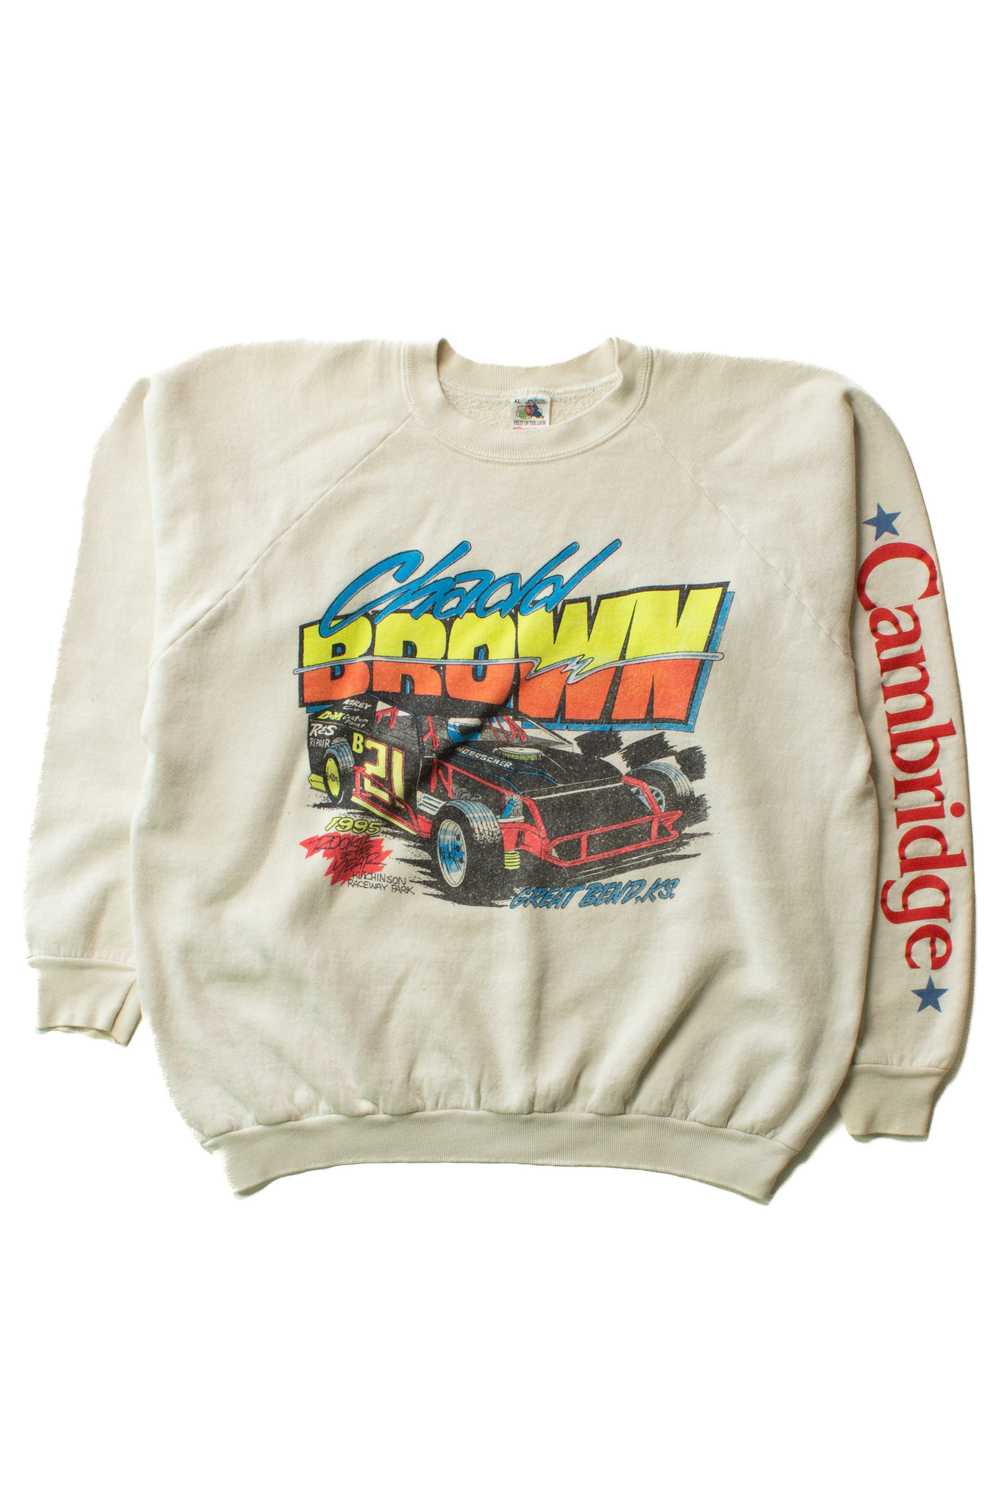 Vintage Chadd Brown Cambridge Sweatshirt (1990s) - image 1